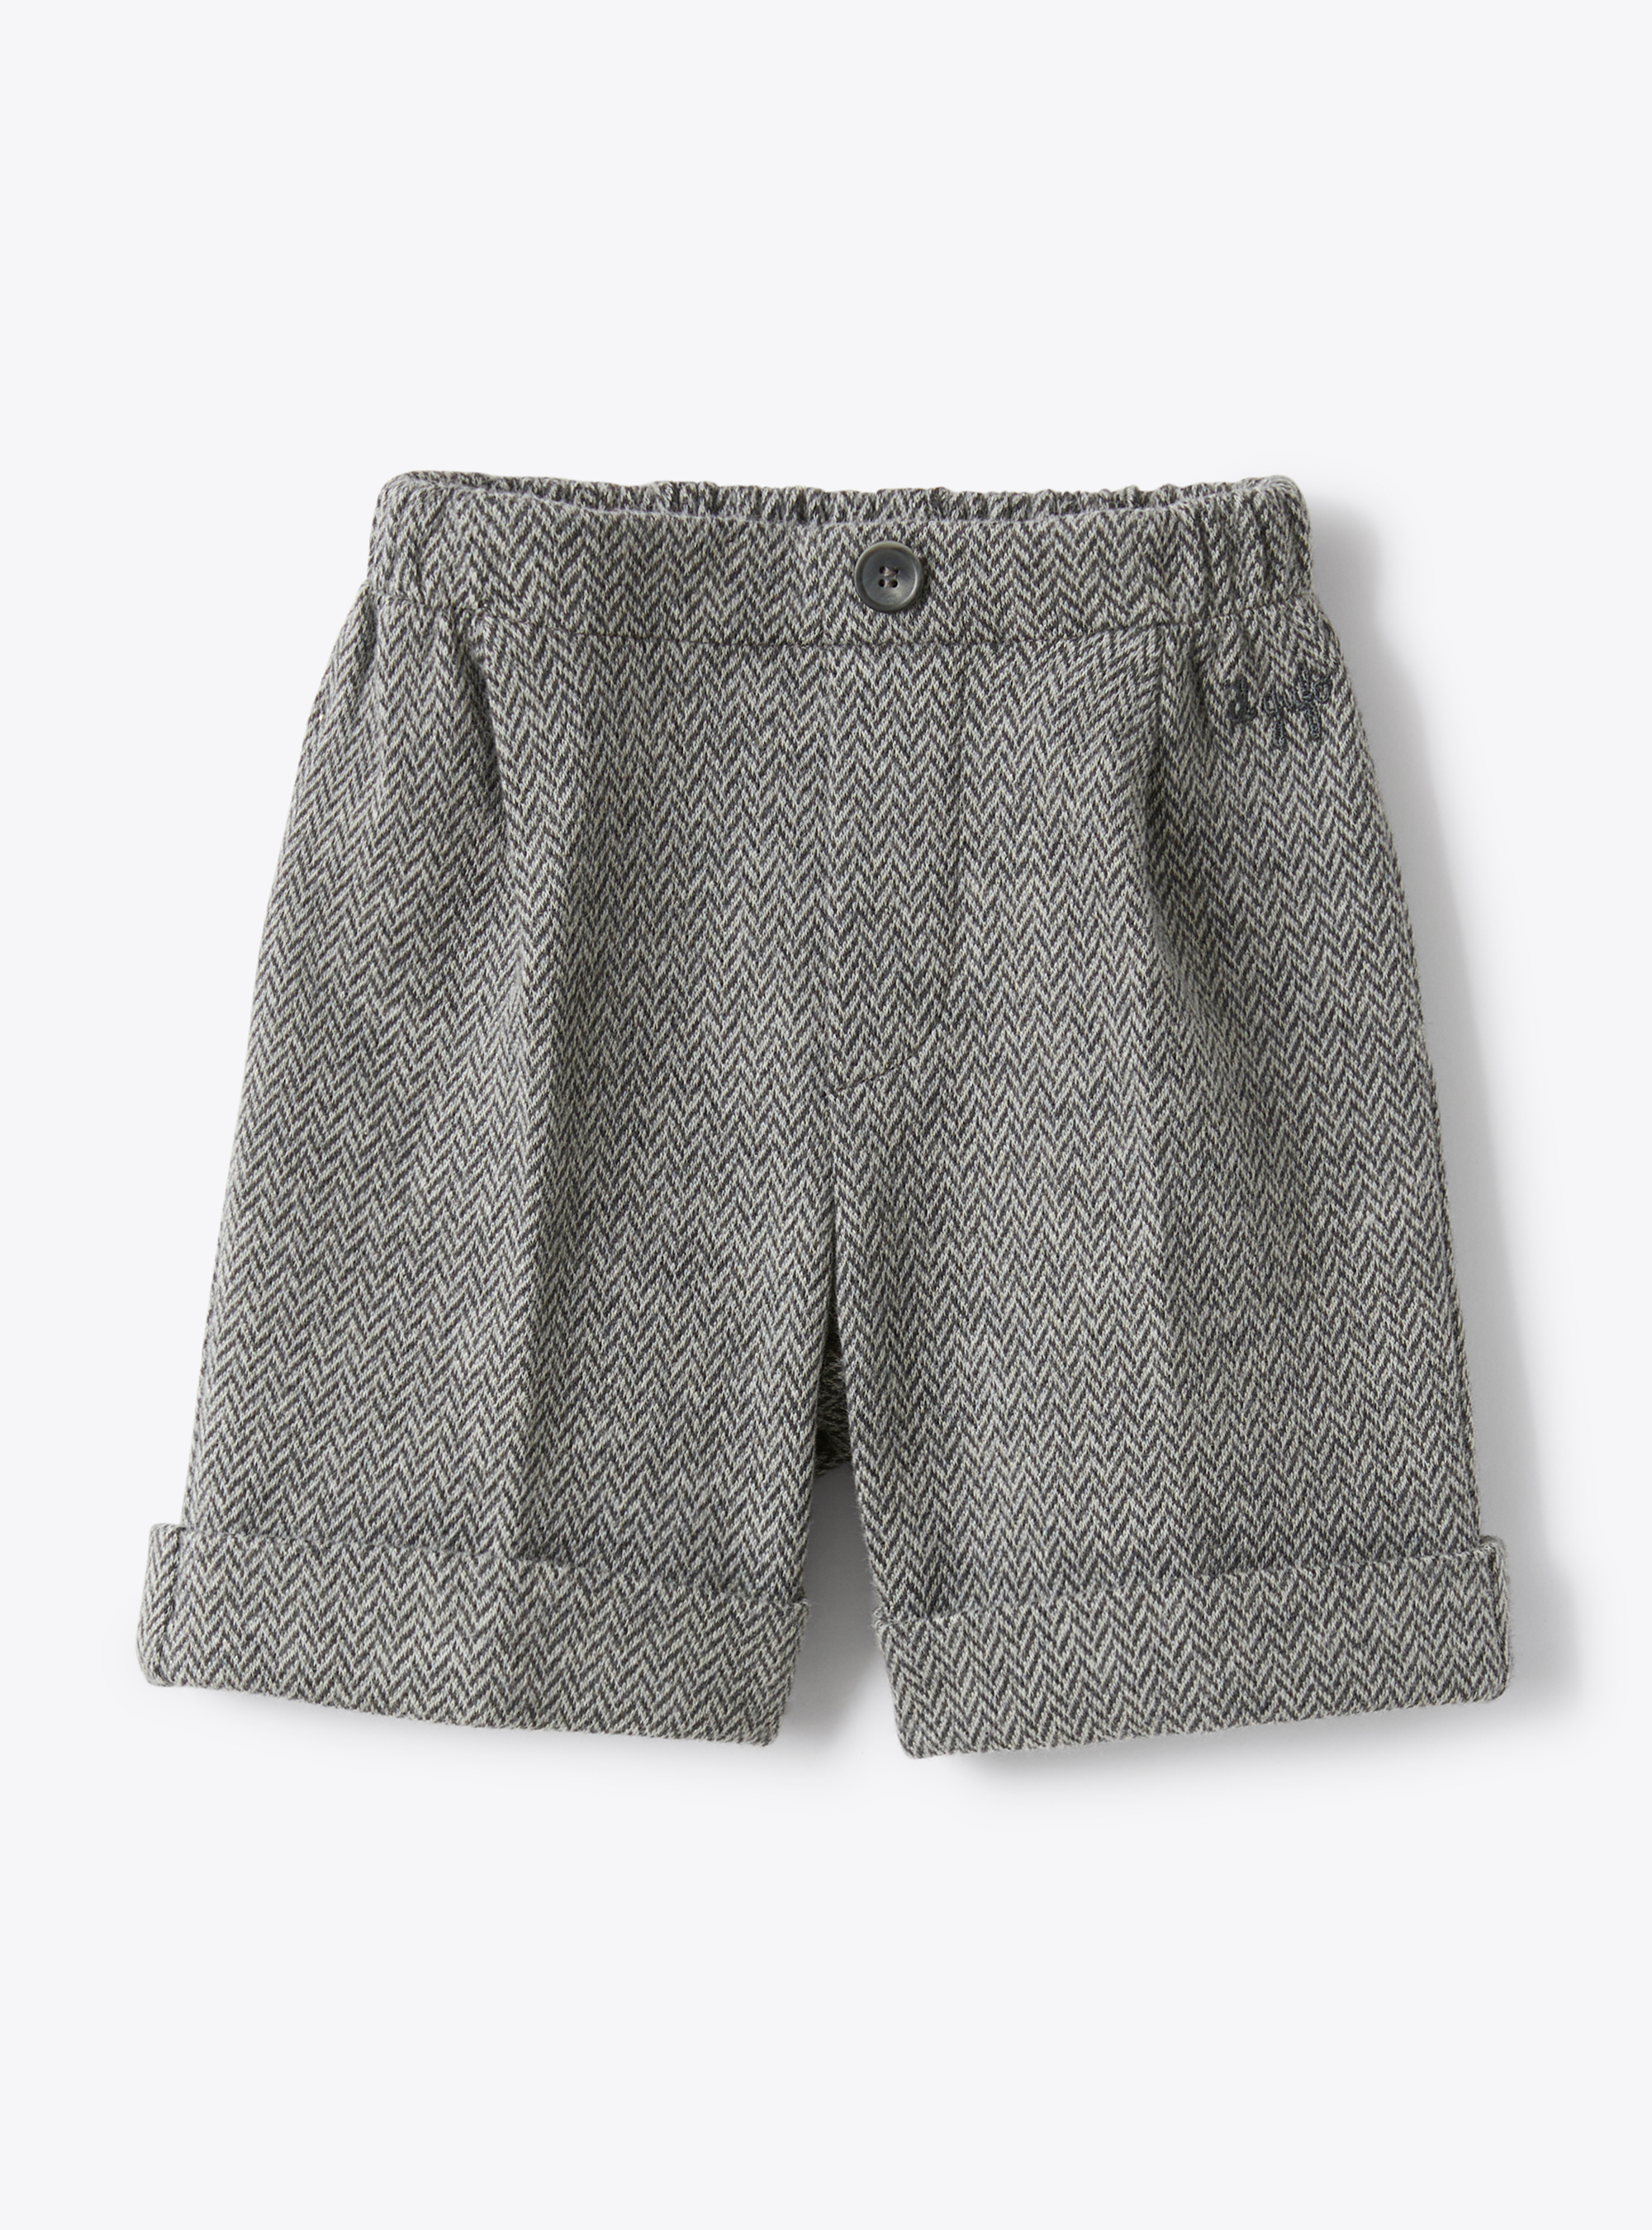 Bermuda shorts in herringbone-patterned cotton - Trousers - Il Gufo